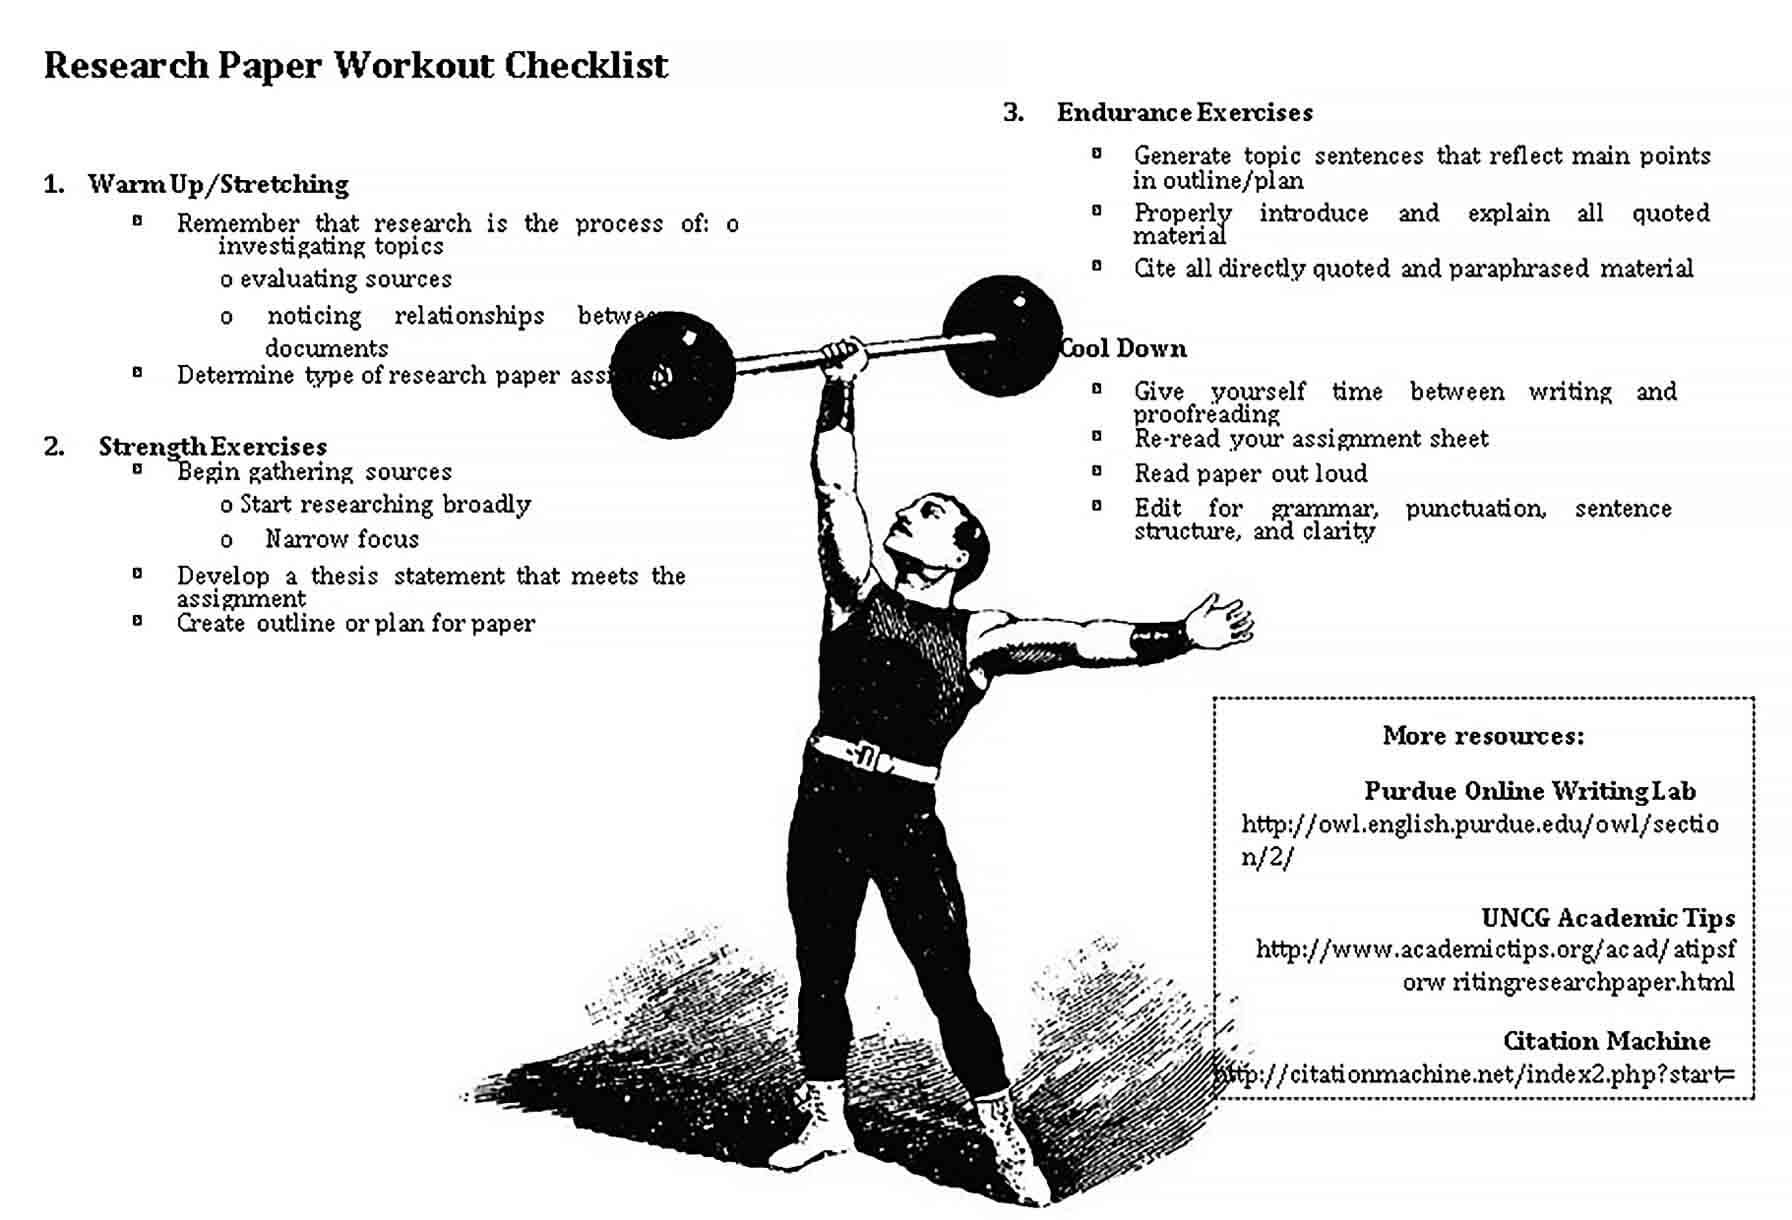 Sample Printable Workout Checklist Template